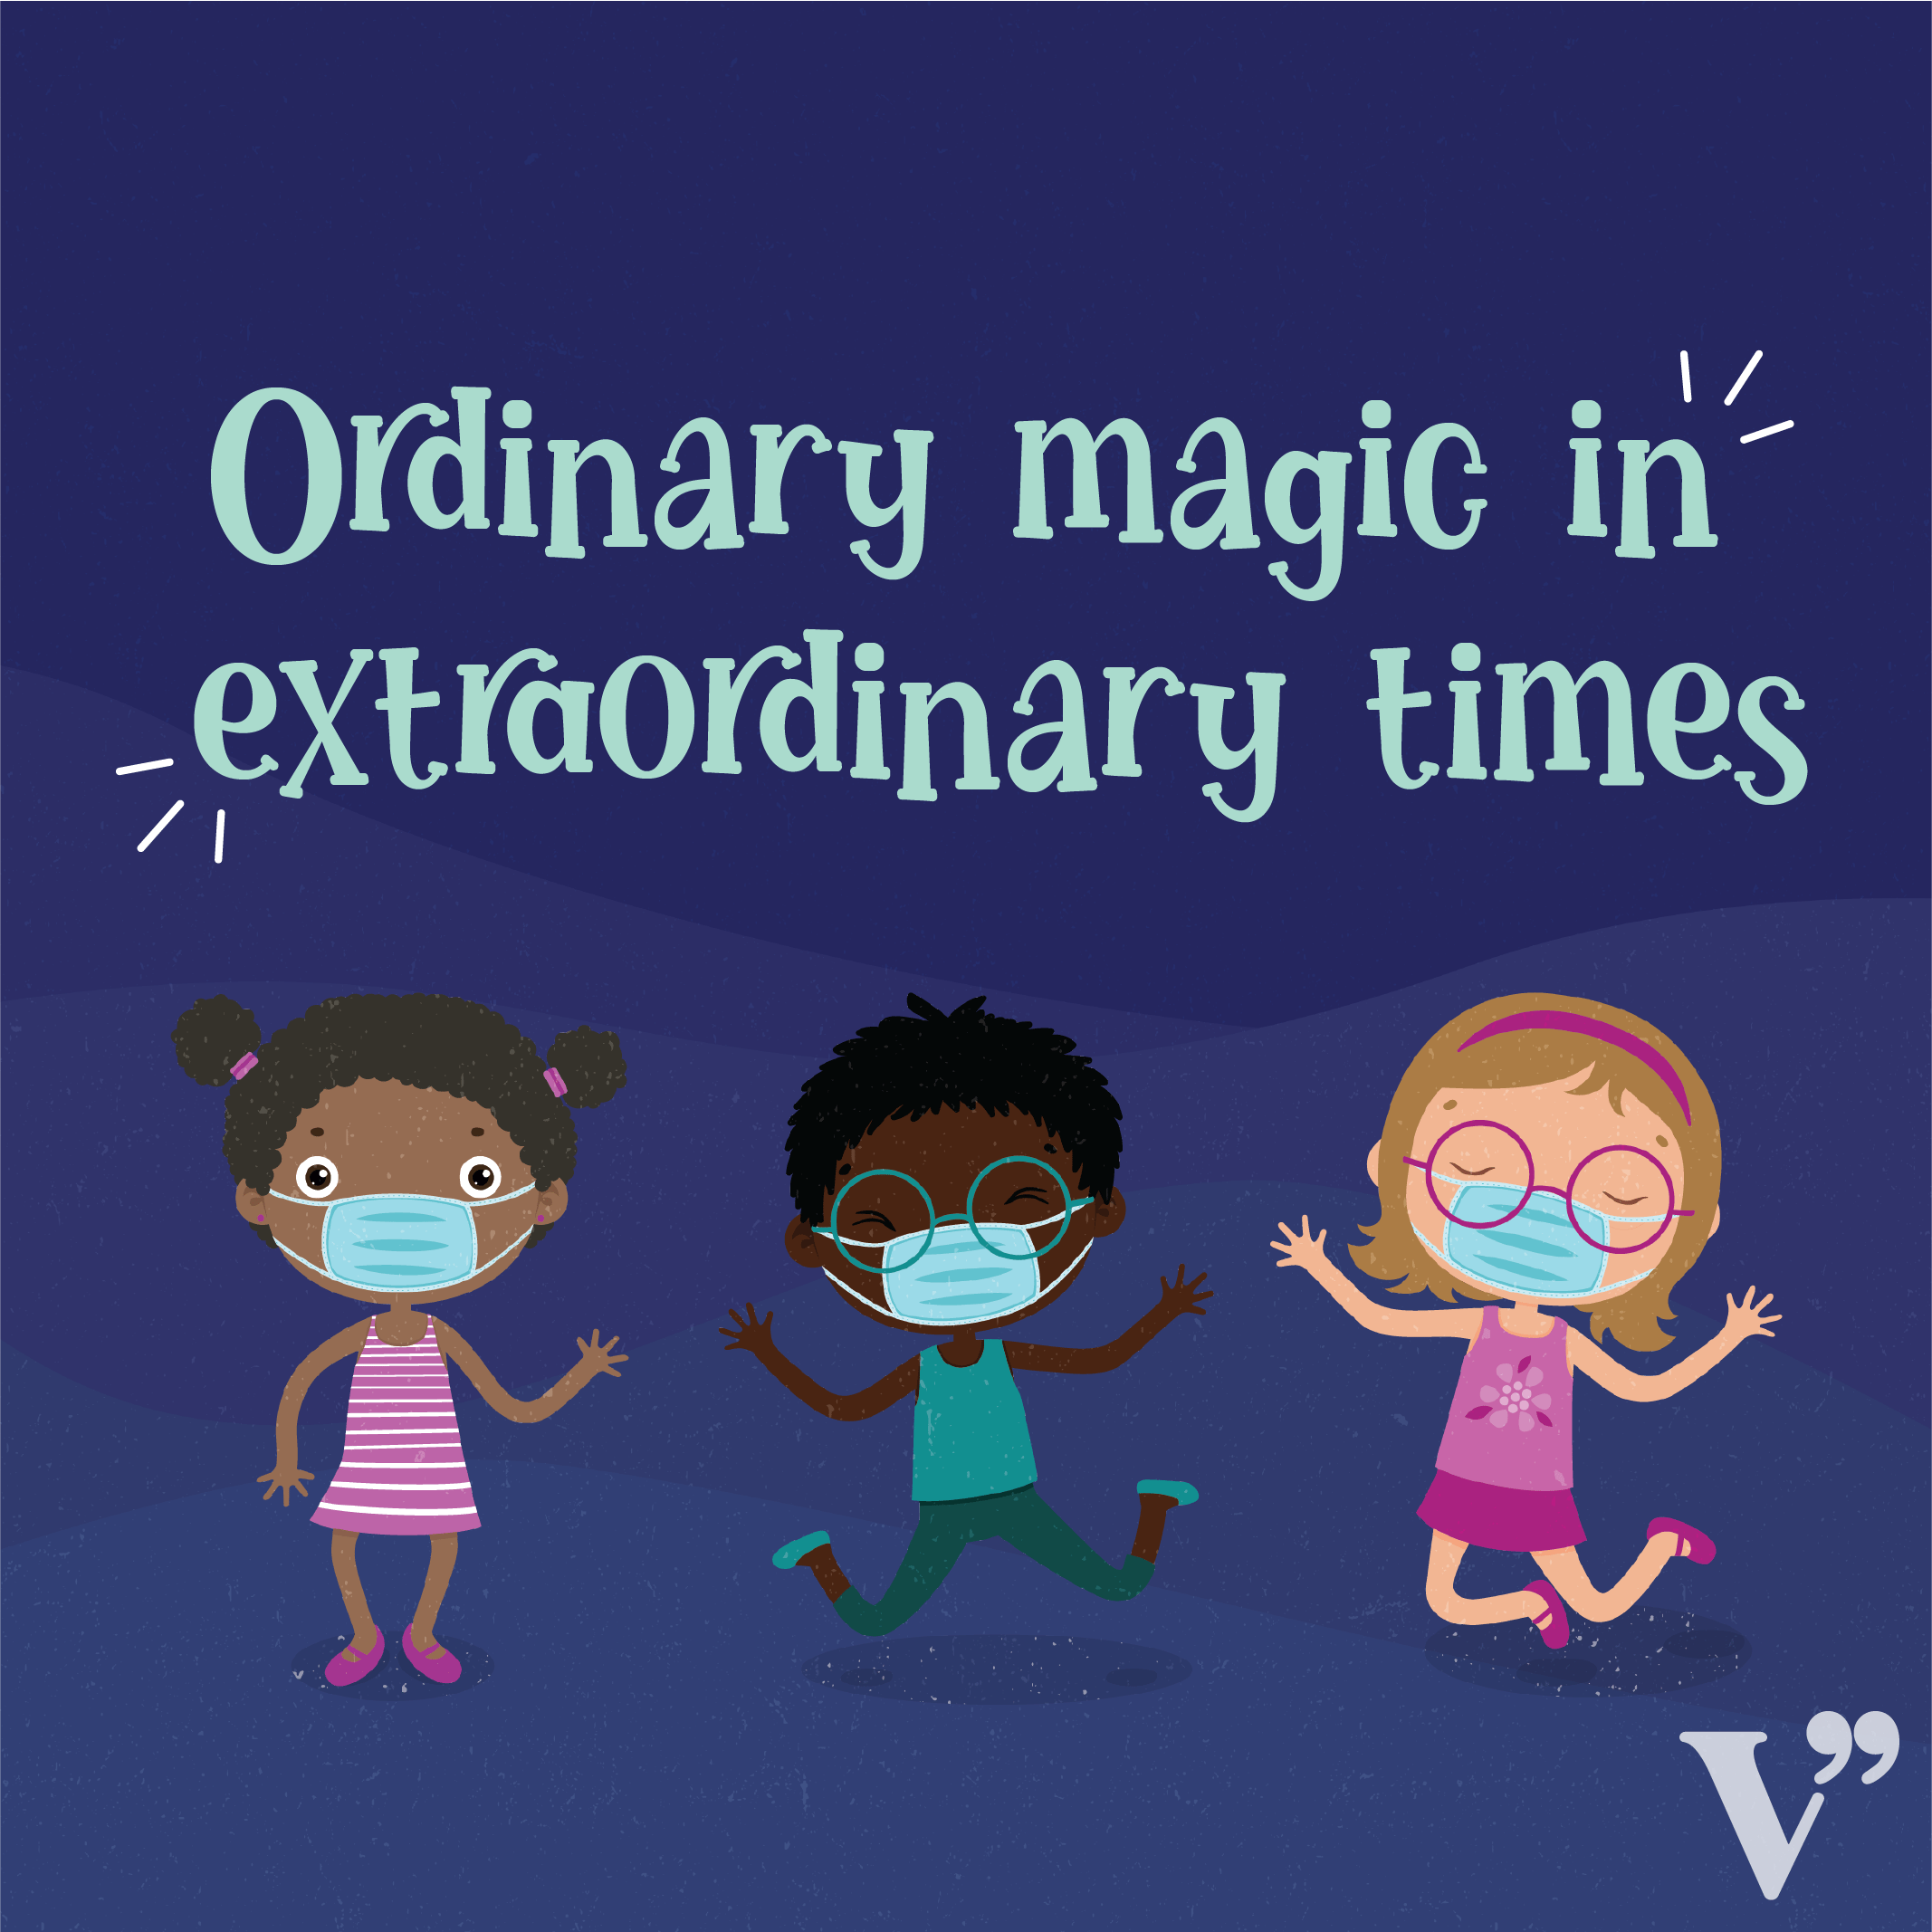 Ordinary magic in extraordinary times